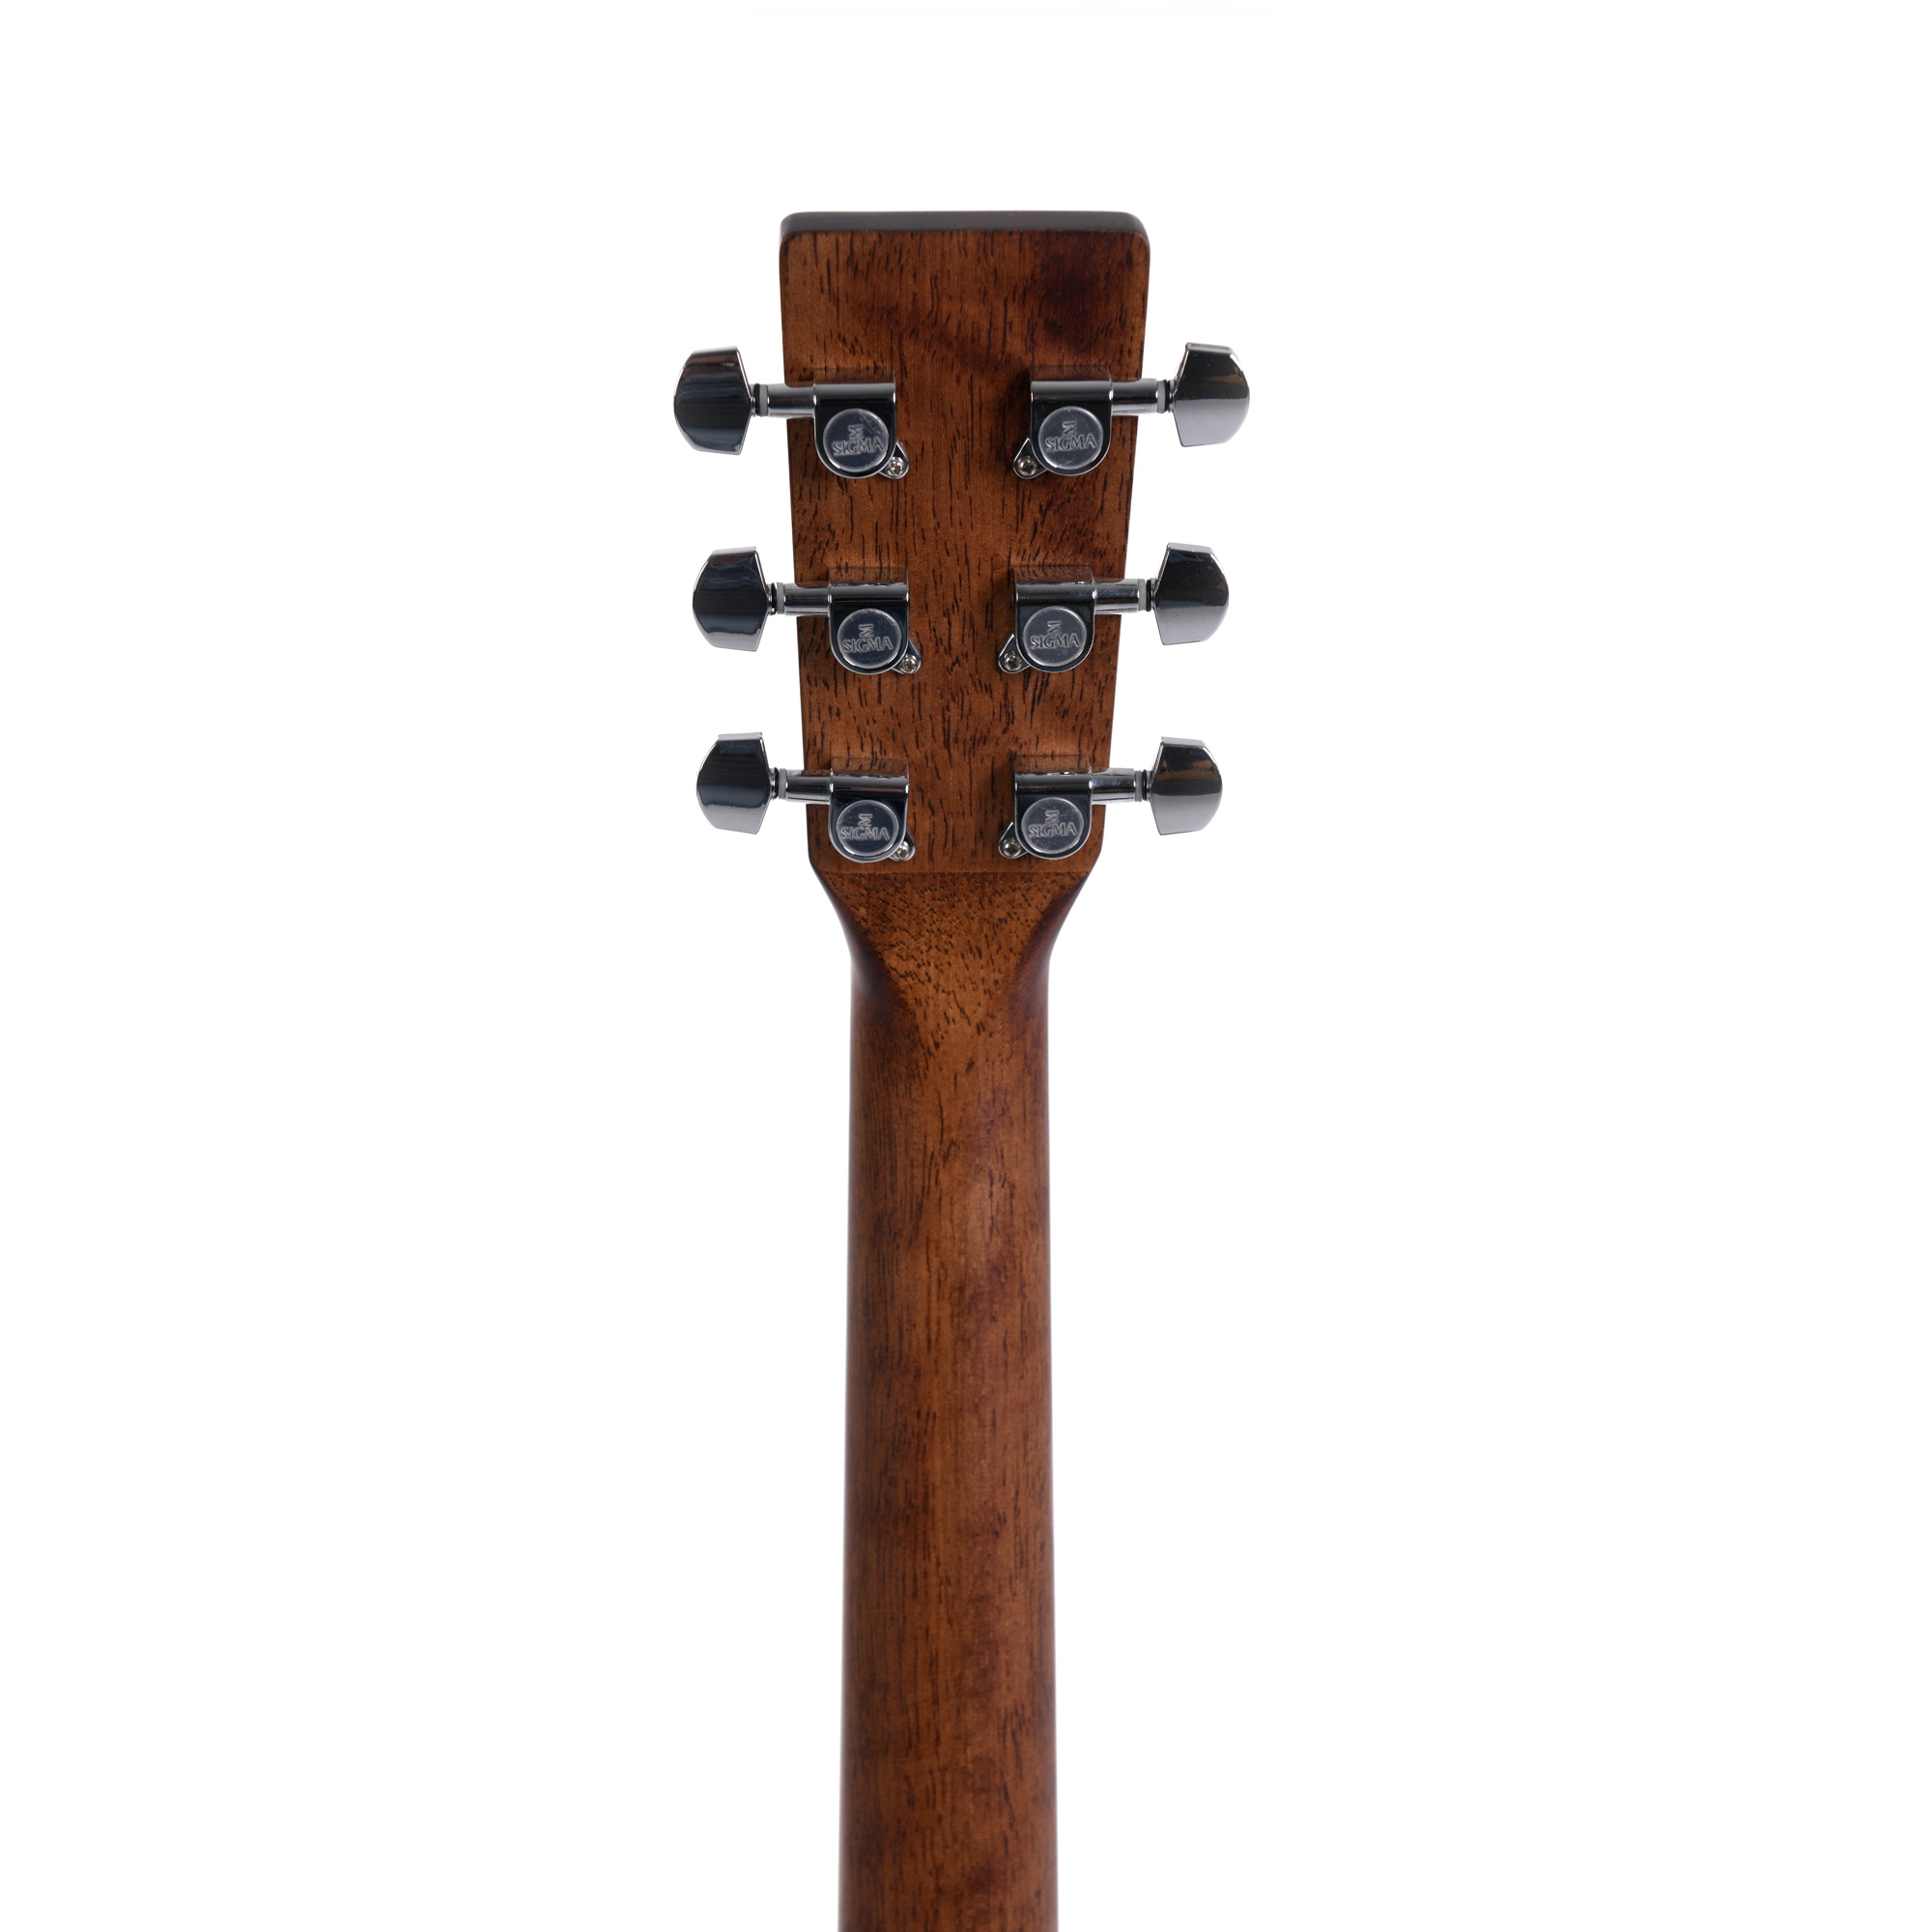 Sigma DMC-1E Elektro Akustik Gitar (Natural)